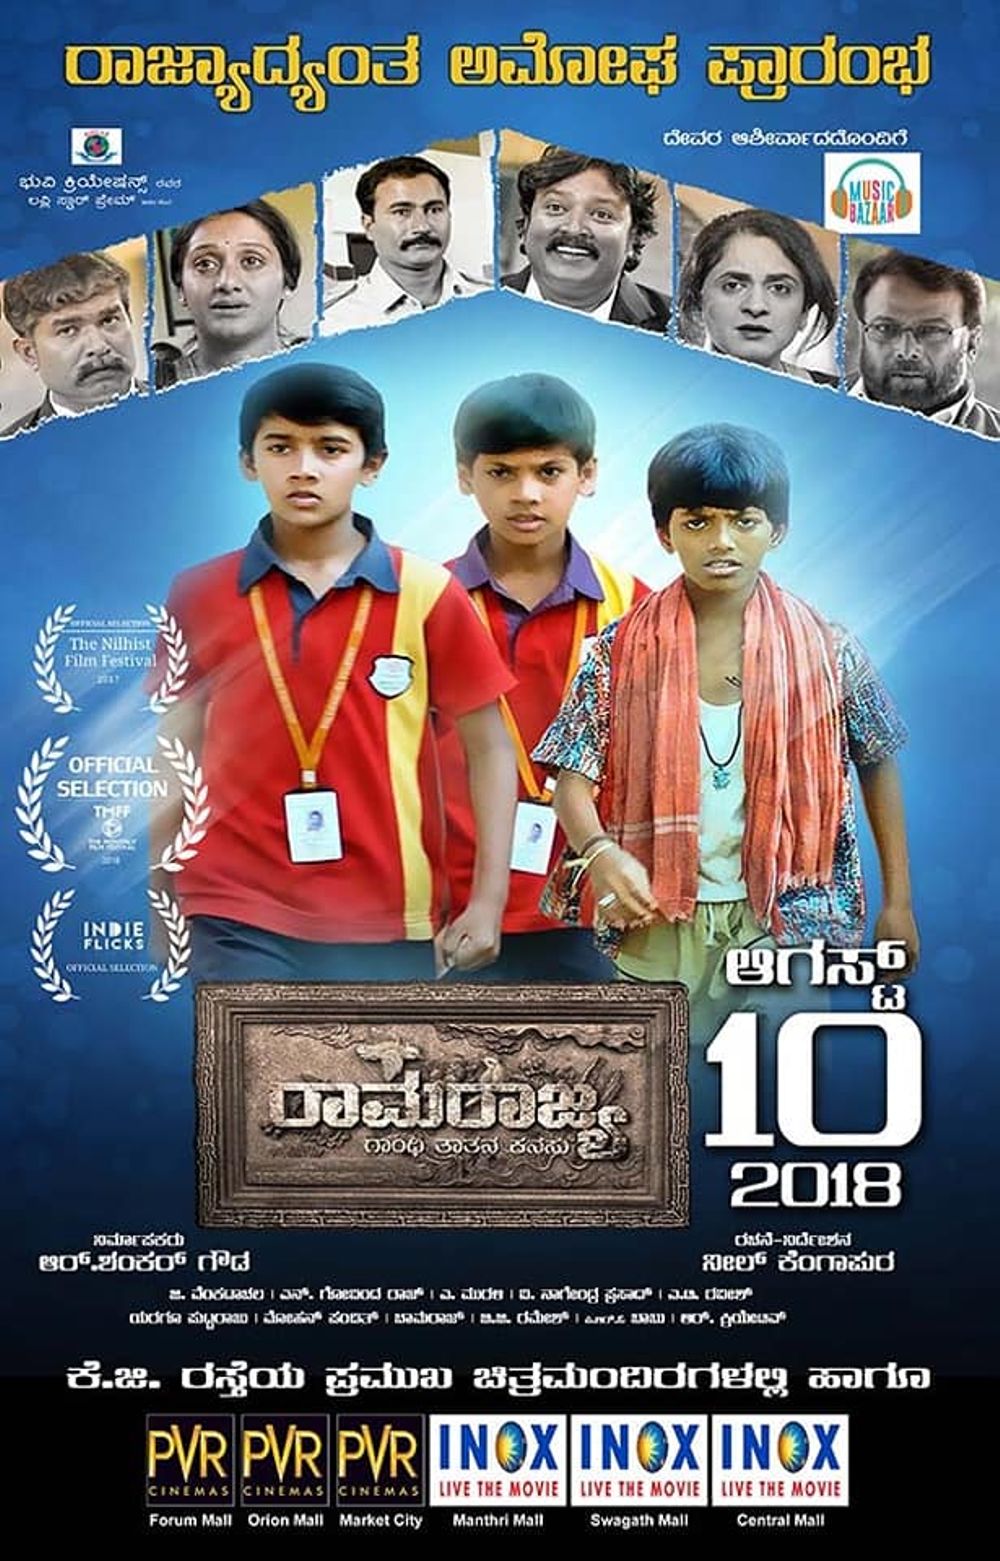 Ramarajya Movie Review